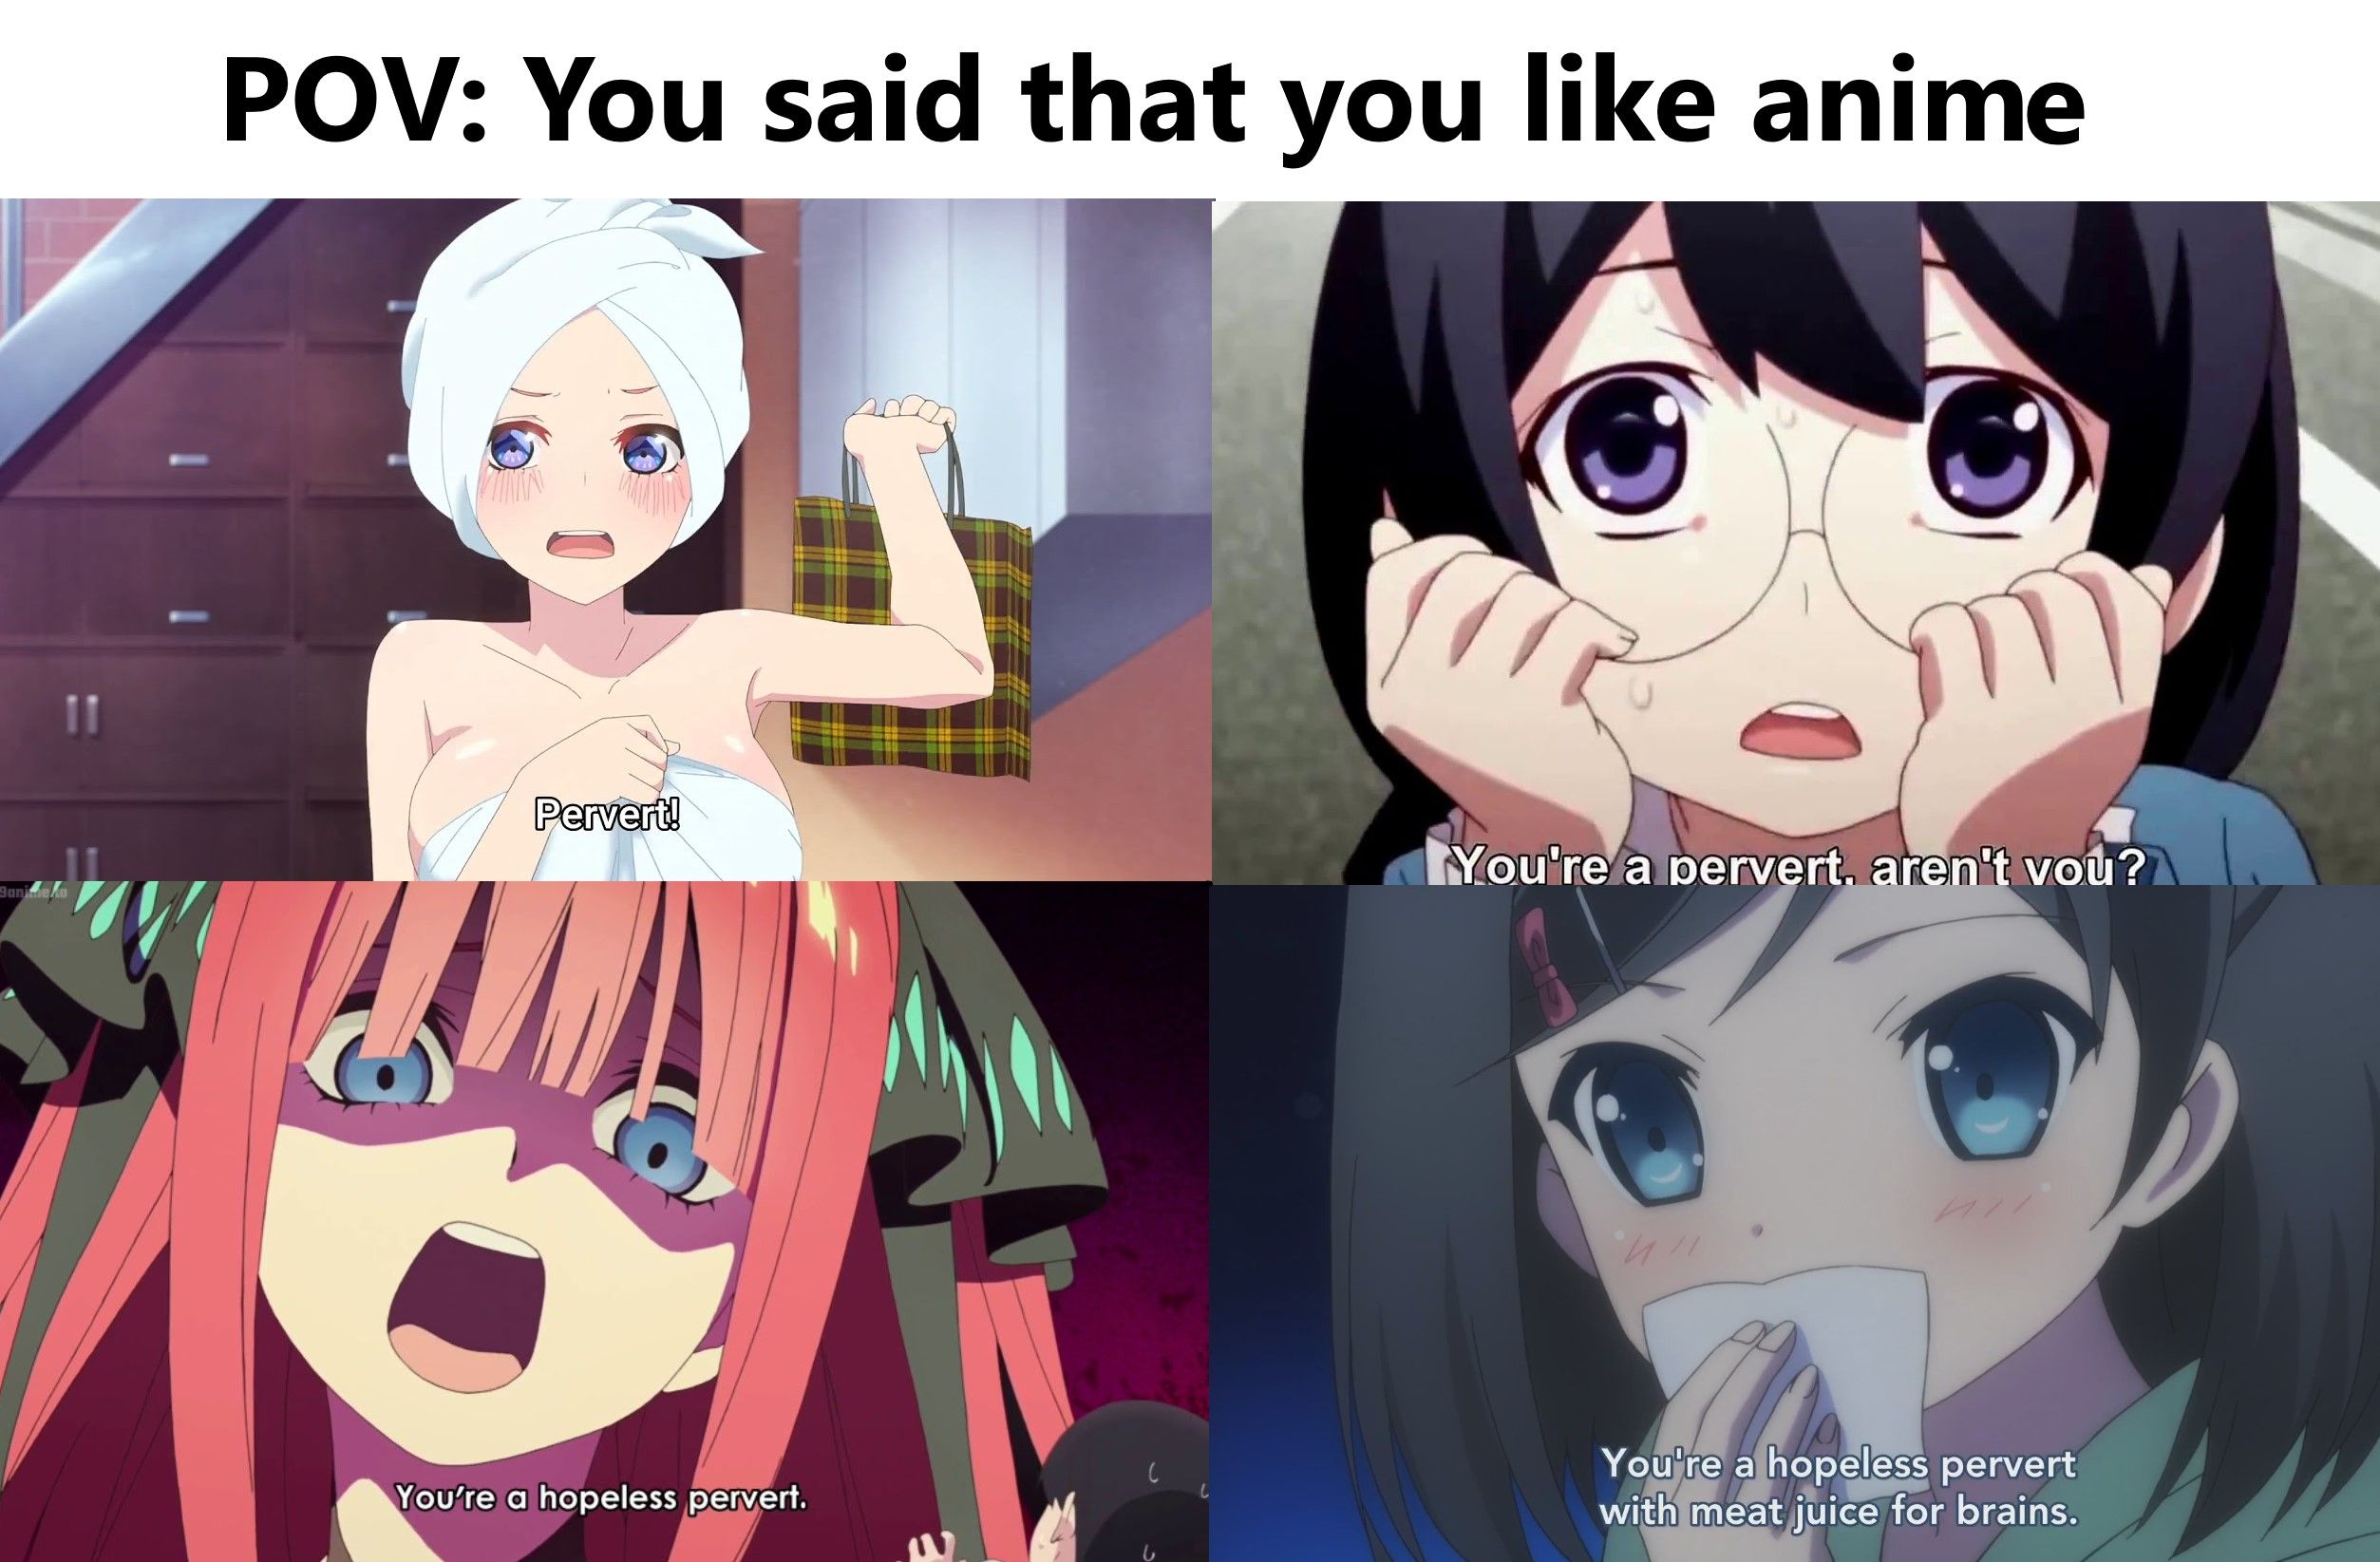 Anime enjoyer experience